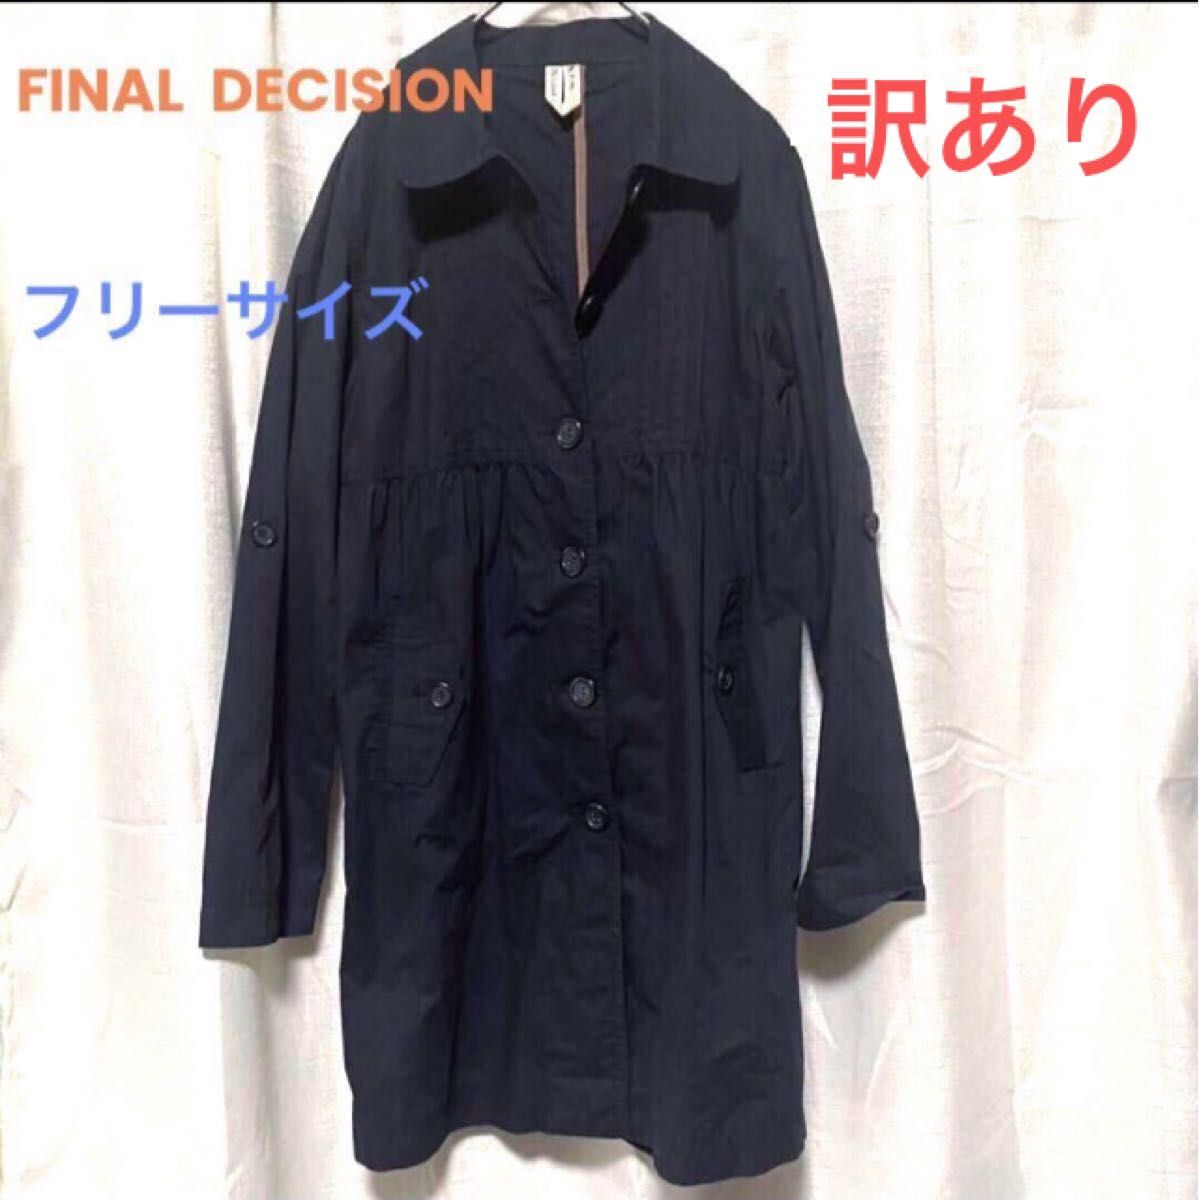 FINAL DECISION ファイナルディシジョン ロングシャツワンピース スプリングコート アウター 羽織り 黒 フリーサイズ